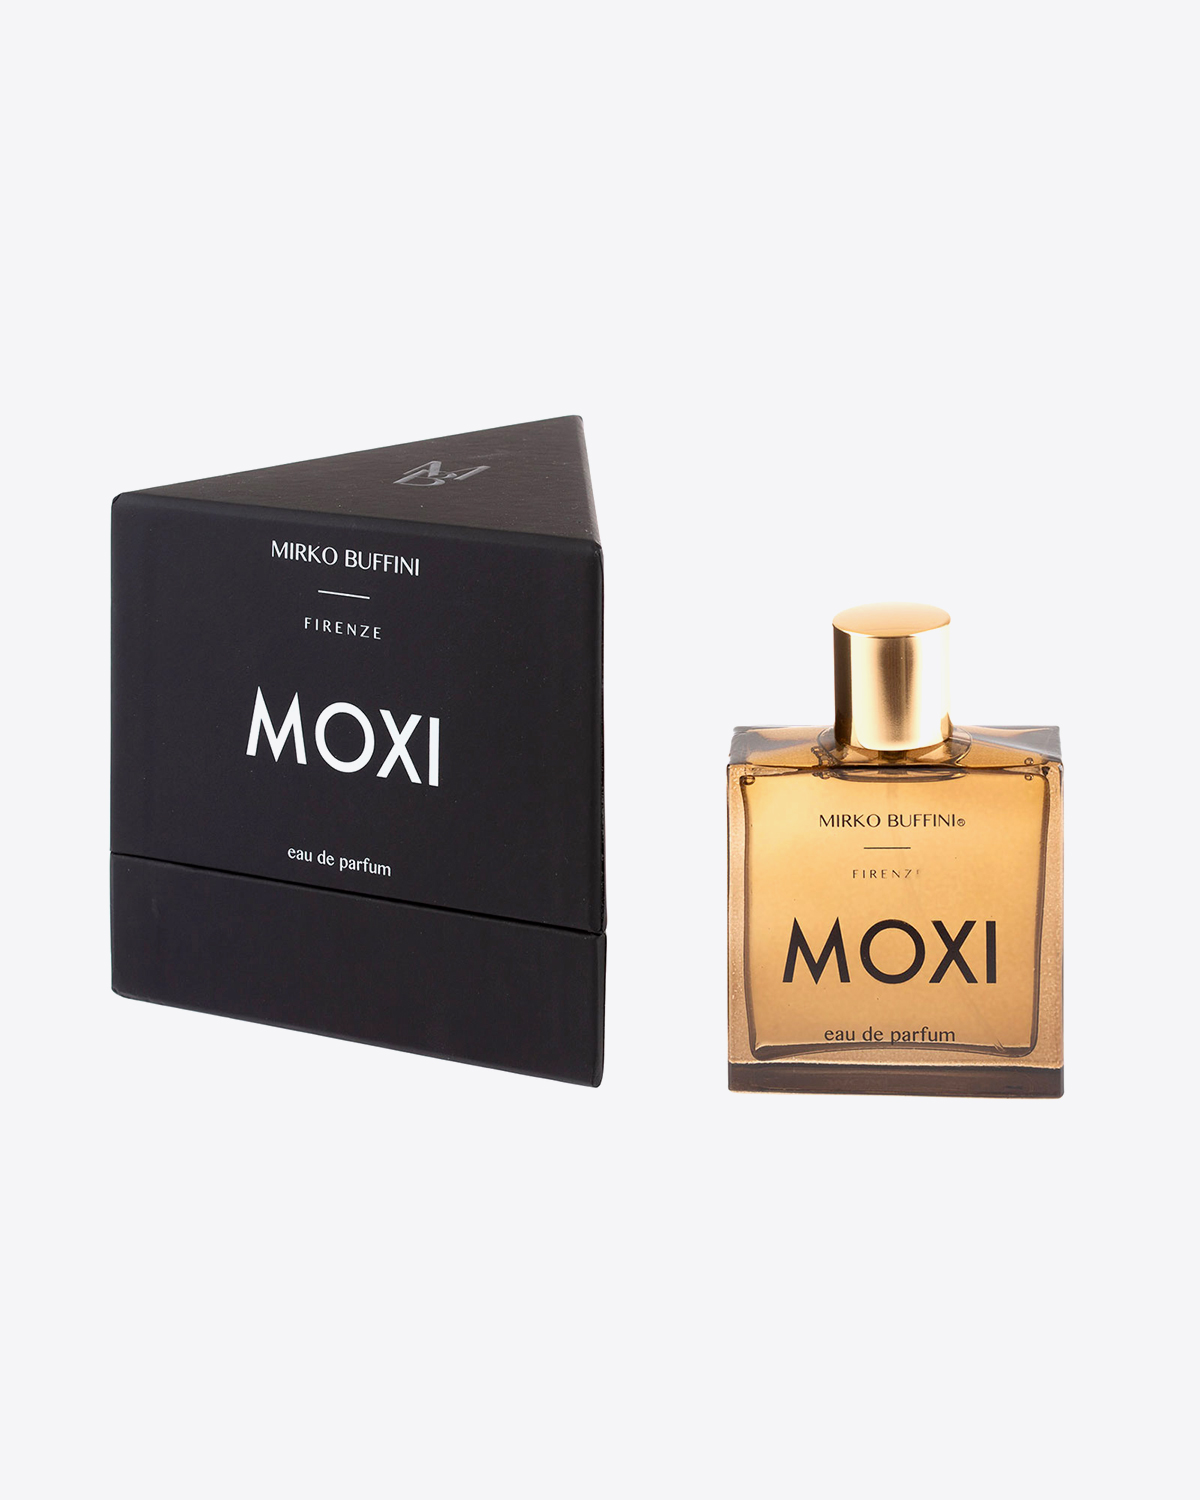 Parfum Moxi Mirko Buffini. Flacon de 100 ml vendu dans sa boite noire triangulaire. Collection Black.